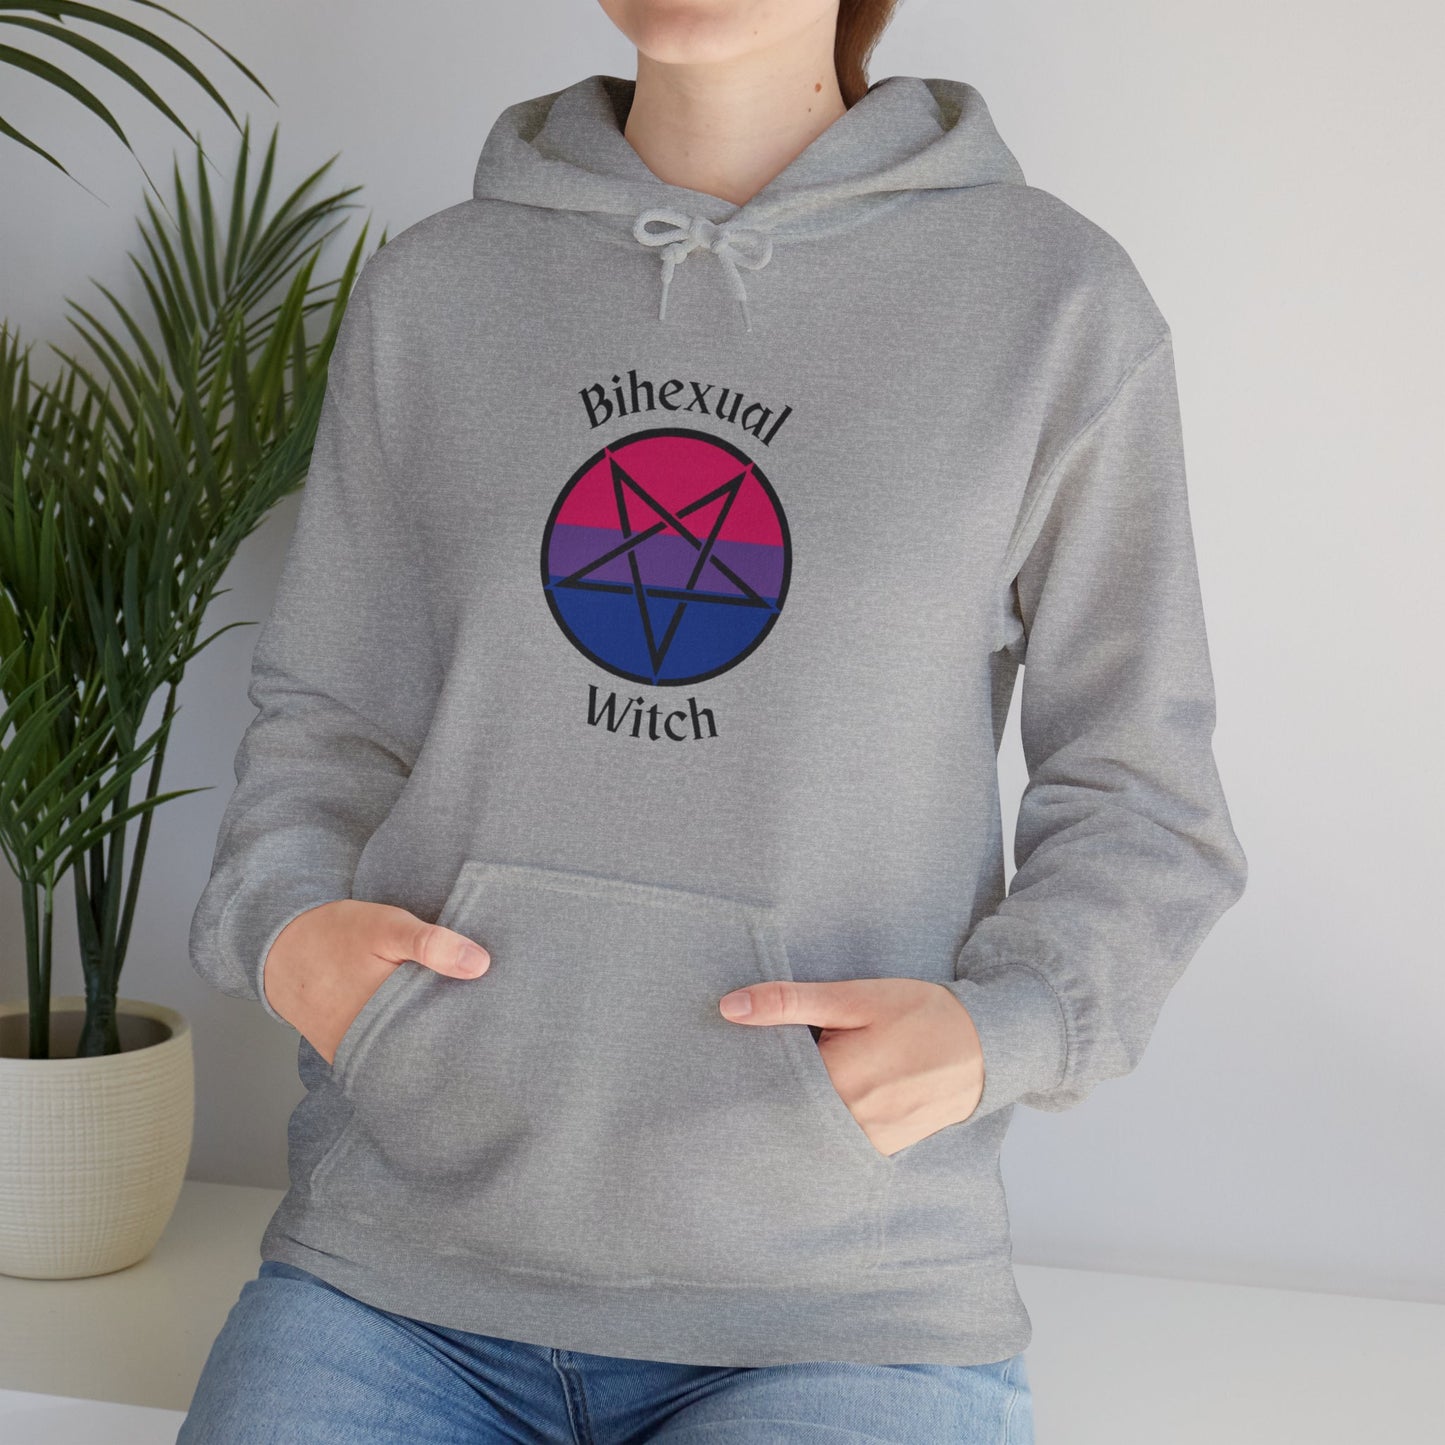 Bihexual Witch Unisex Hooded Sweatshirt